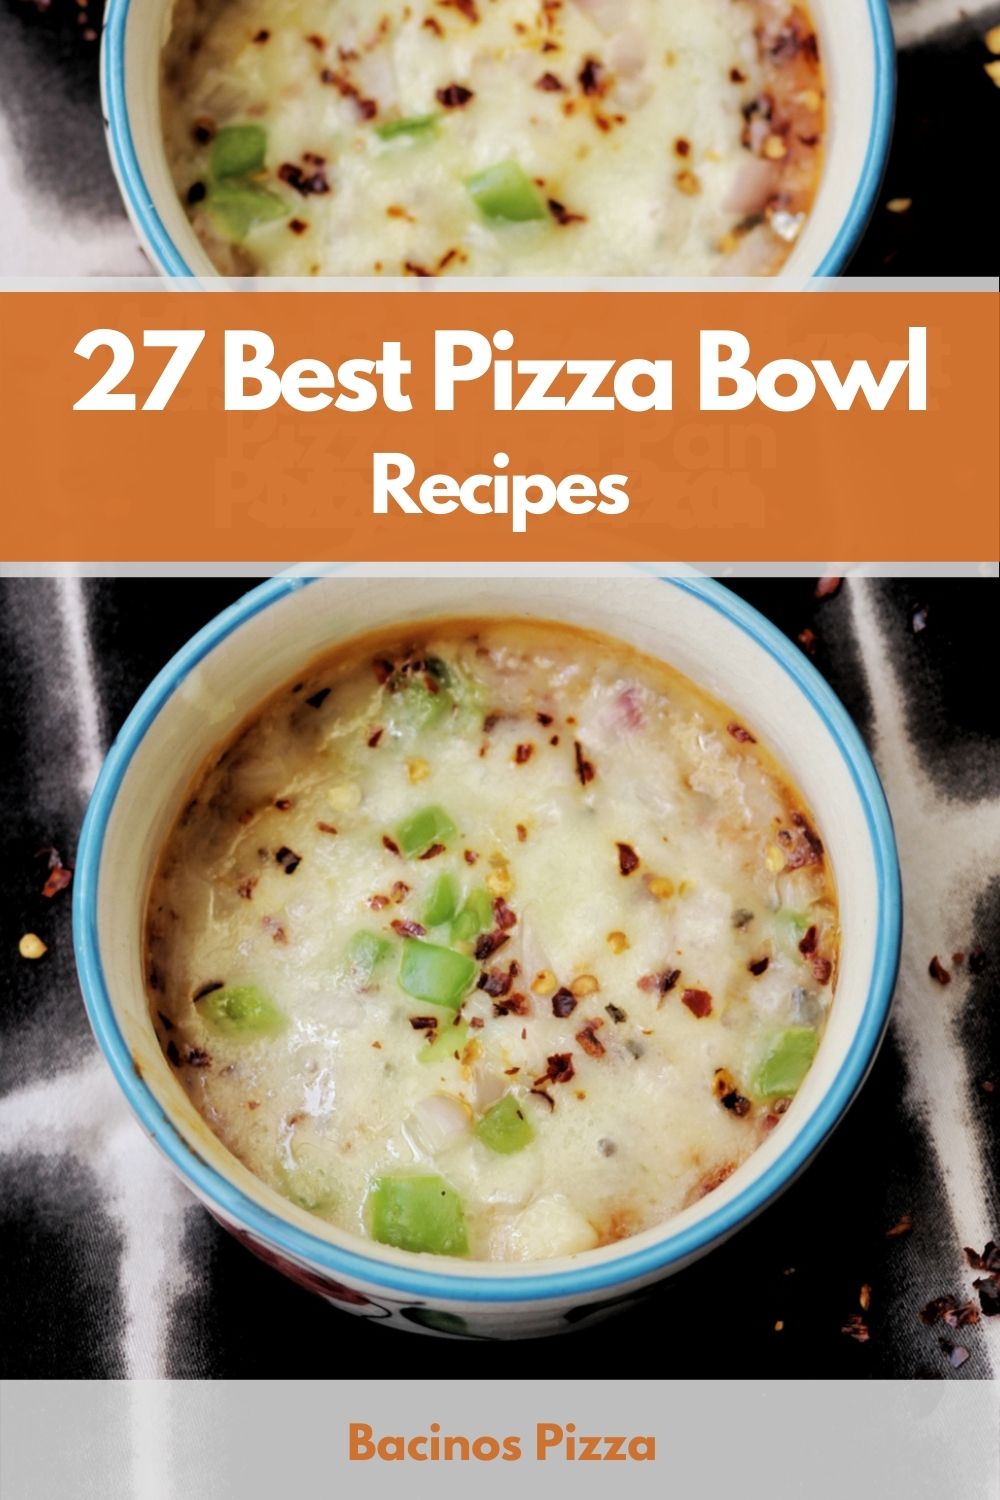 27 Best Pizza Bowl Recipes pin